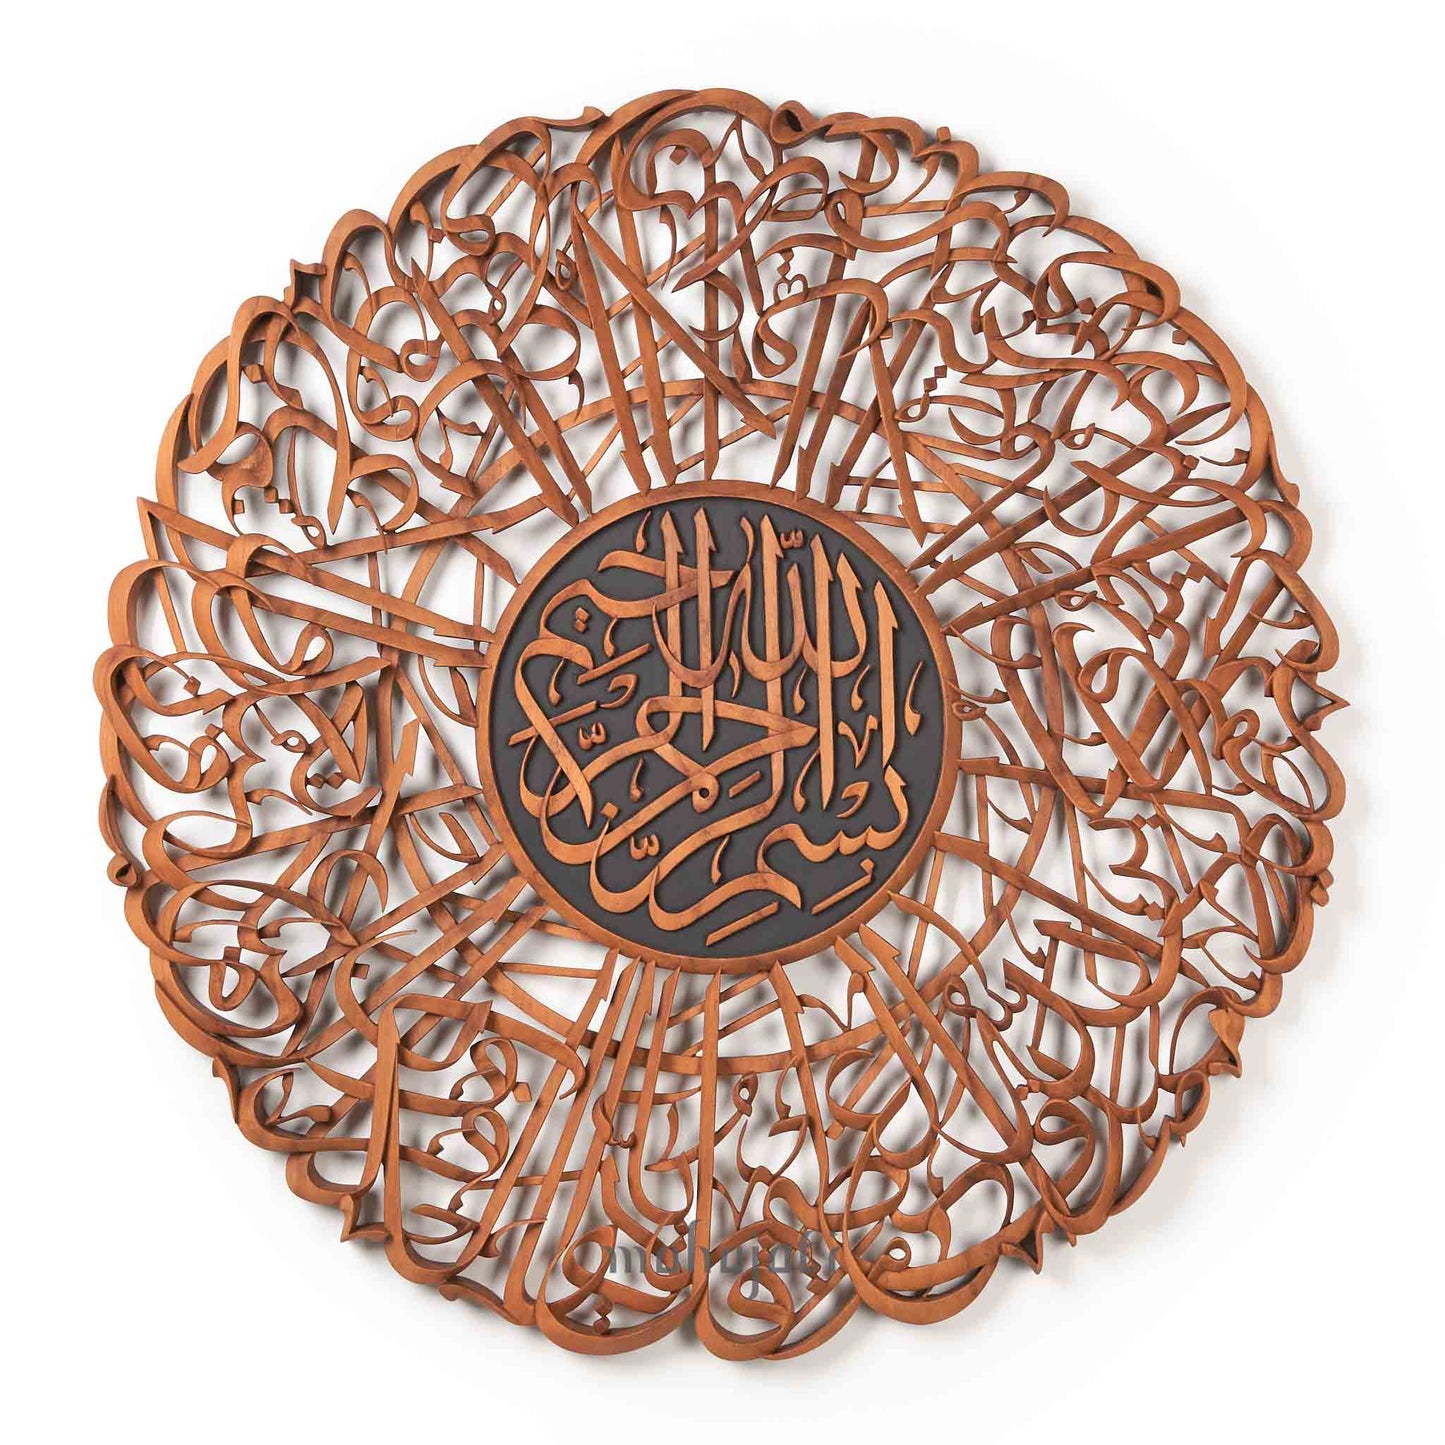 Al-Kafirun / Bismillah Arabic Calligraphy Wood Carving Art by Mahajati